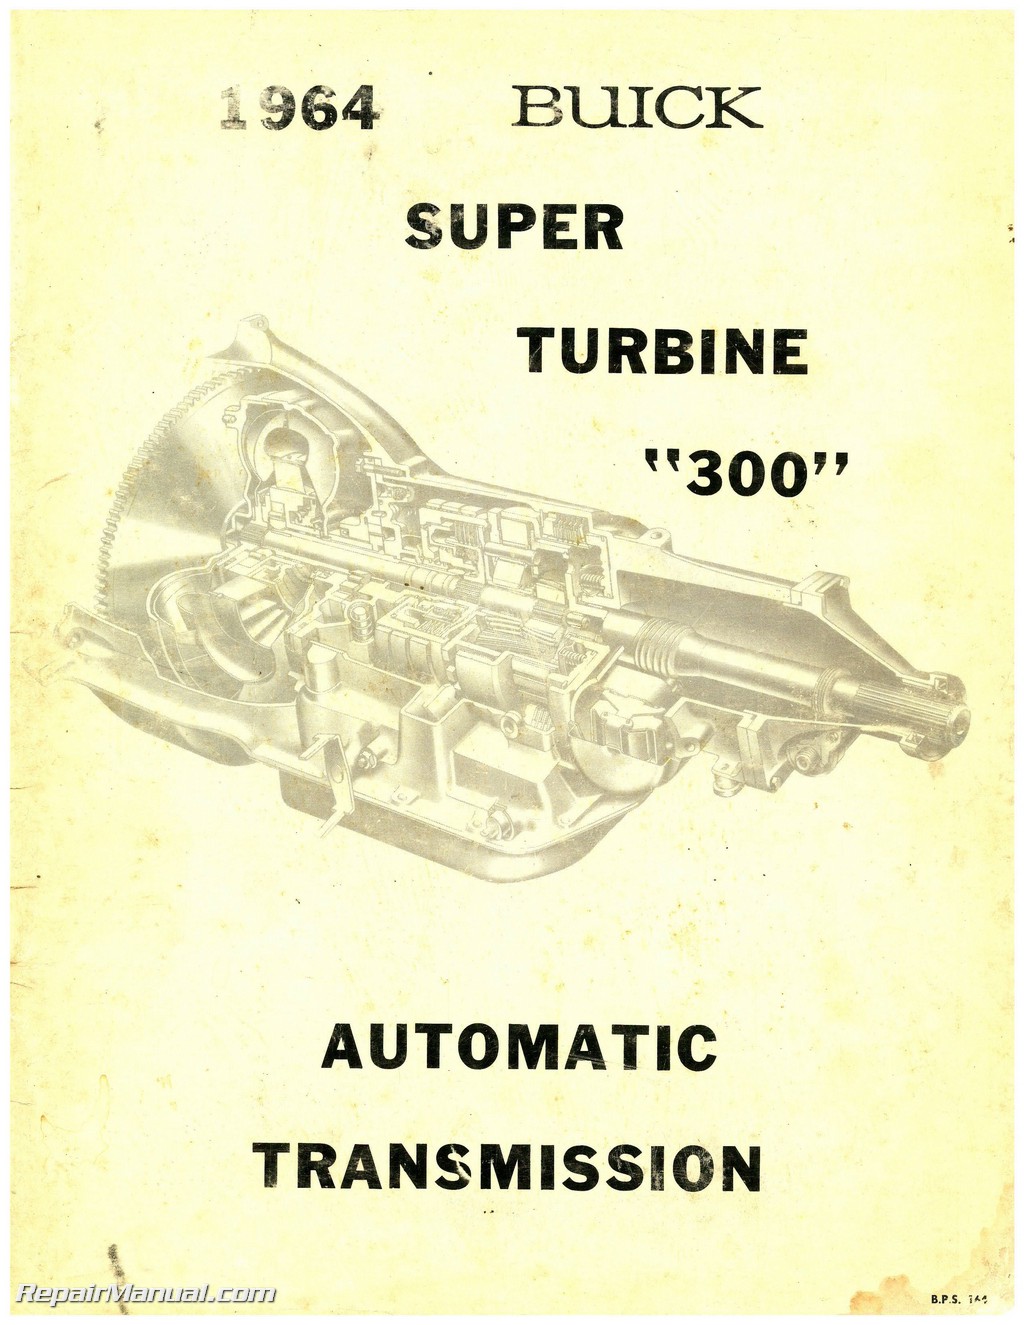 1964 Buick Super Turbine 300 Automatic Transmission ... snowblower schematics 